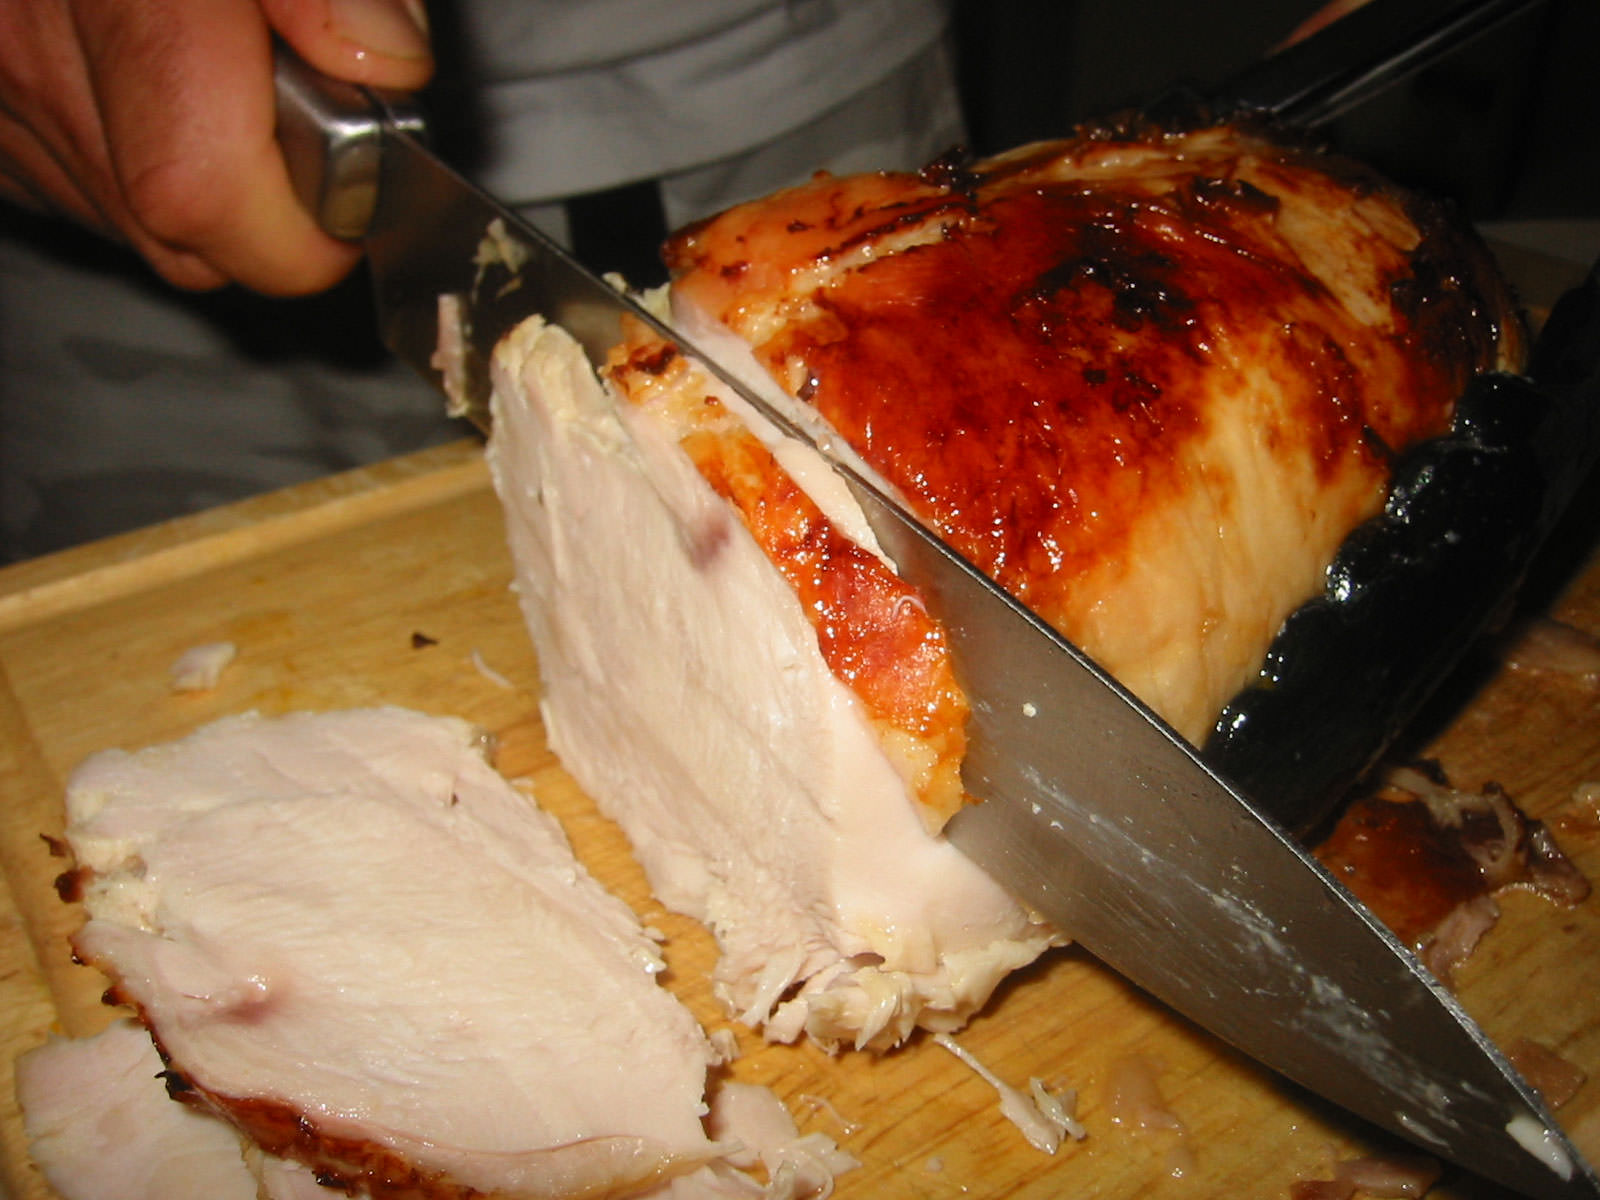 Carving the turkey breast roast